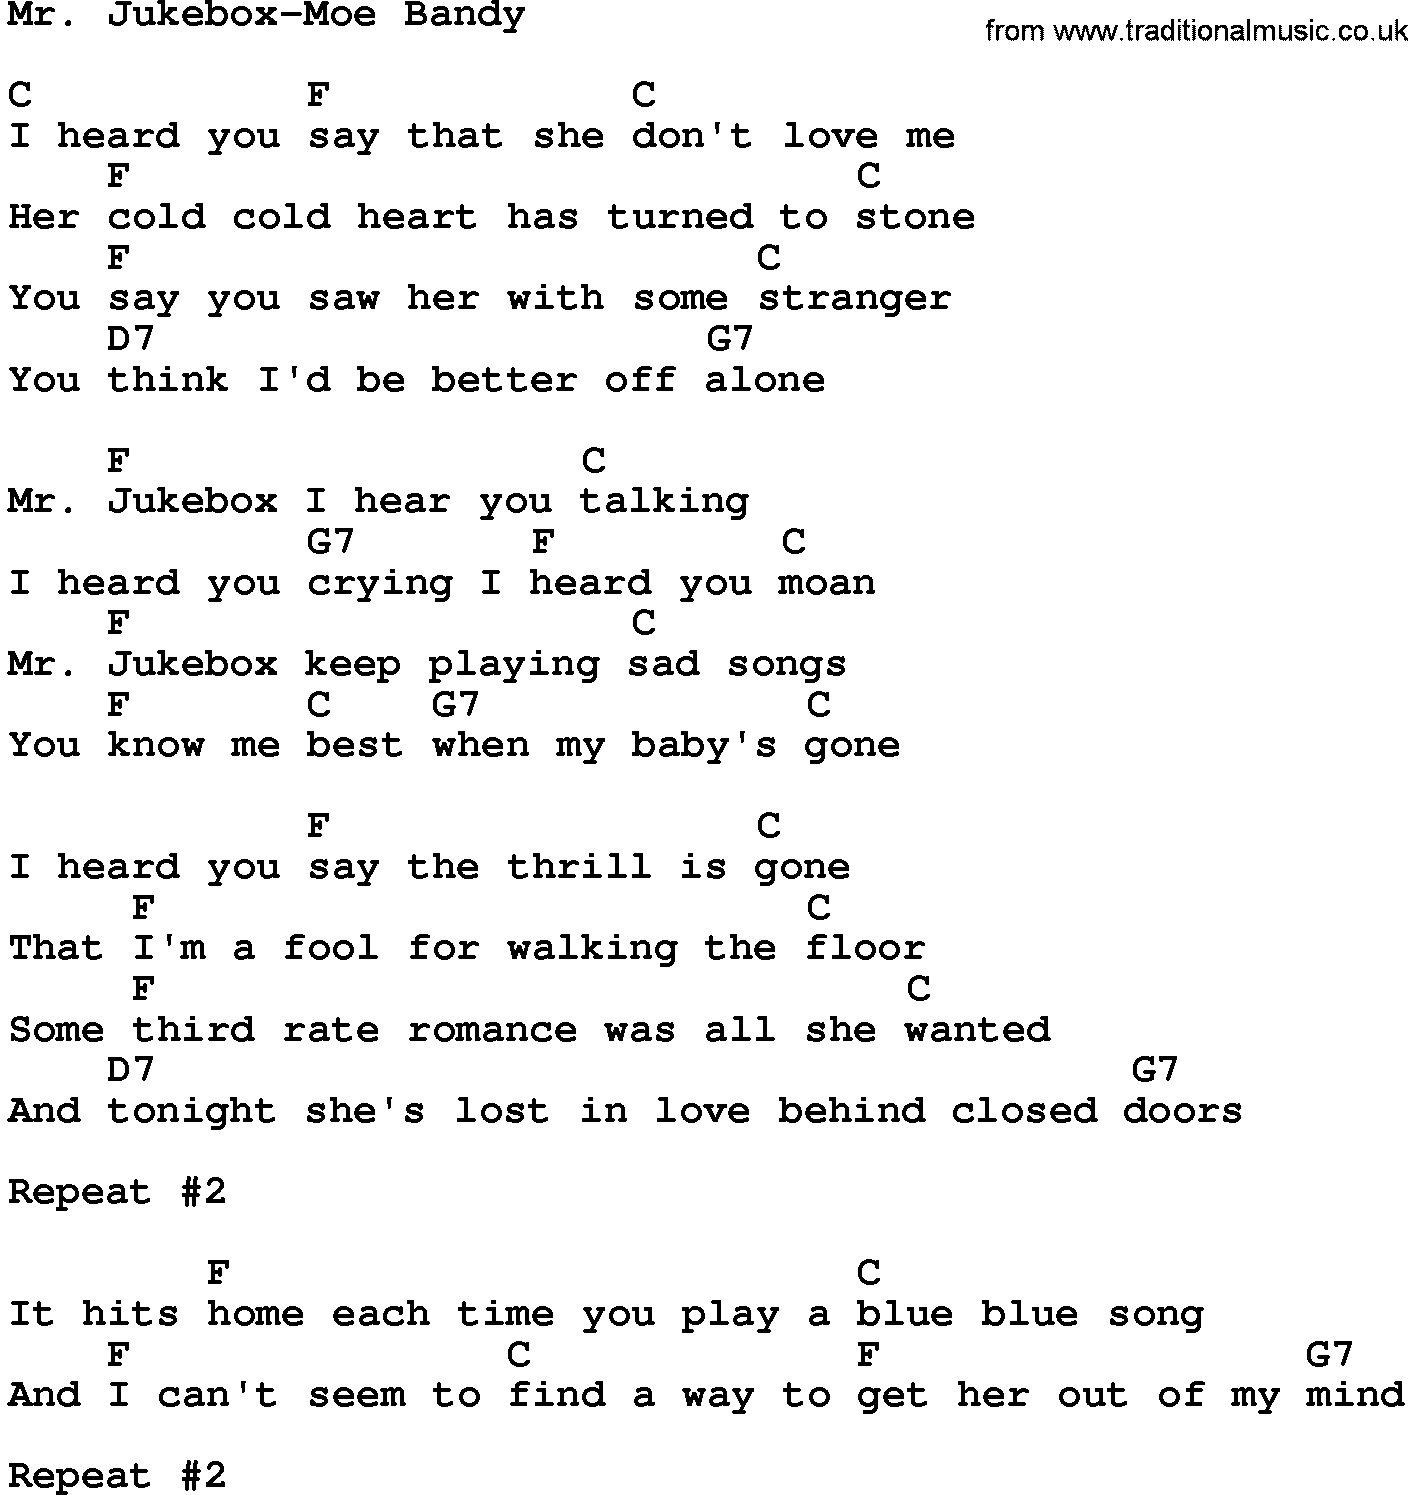 Country music song: Mr Jukebox-Moe Bandy lyrics and chords